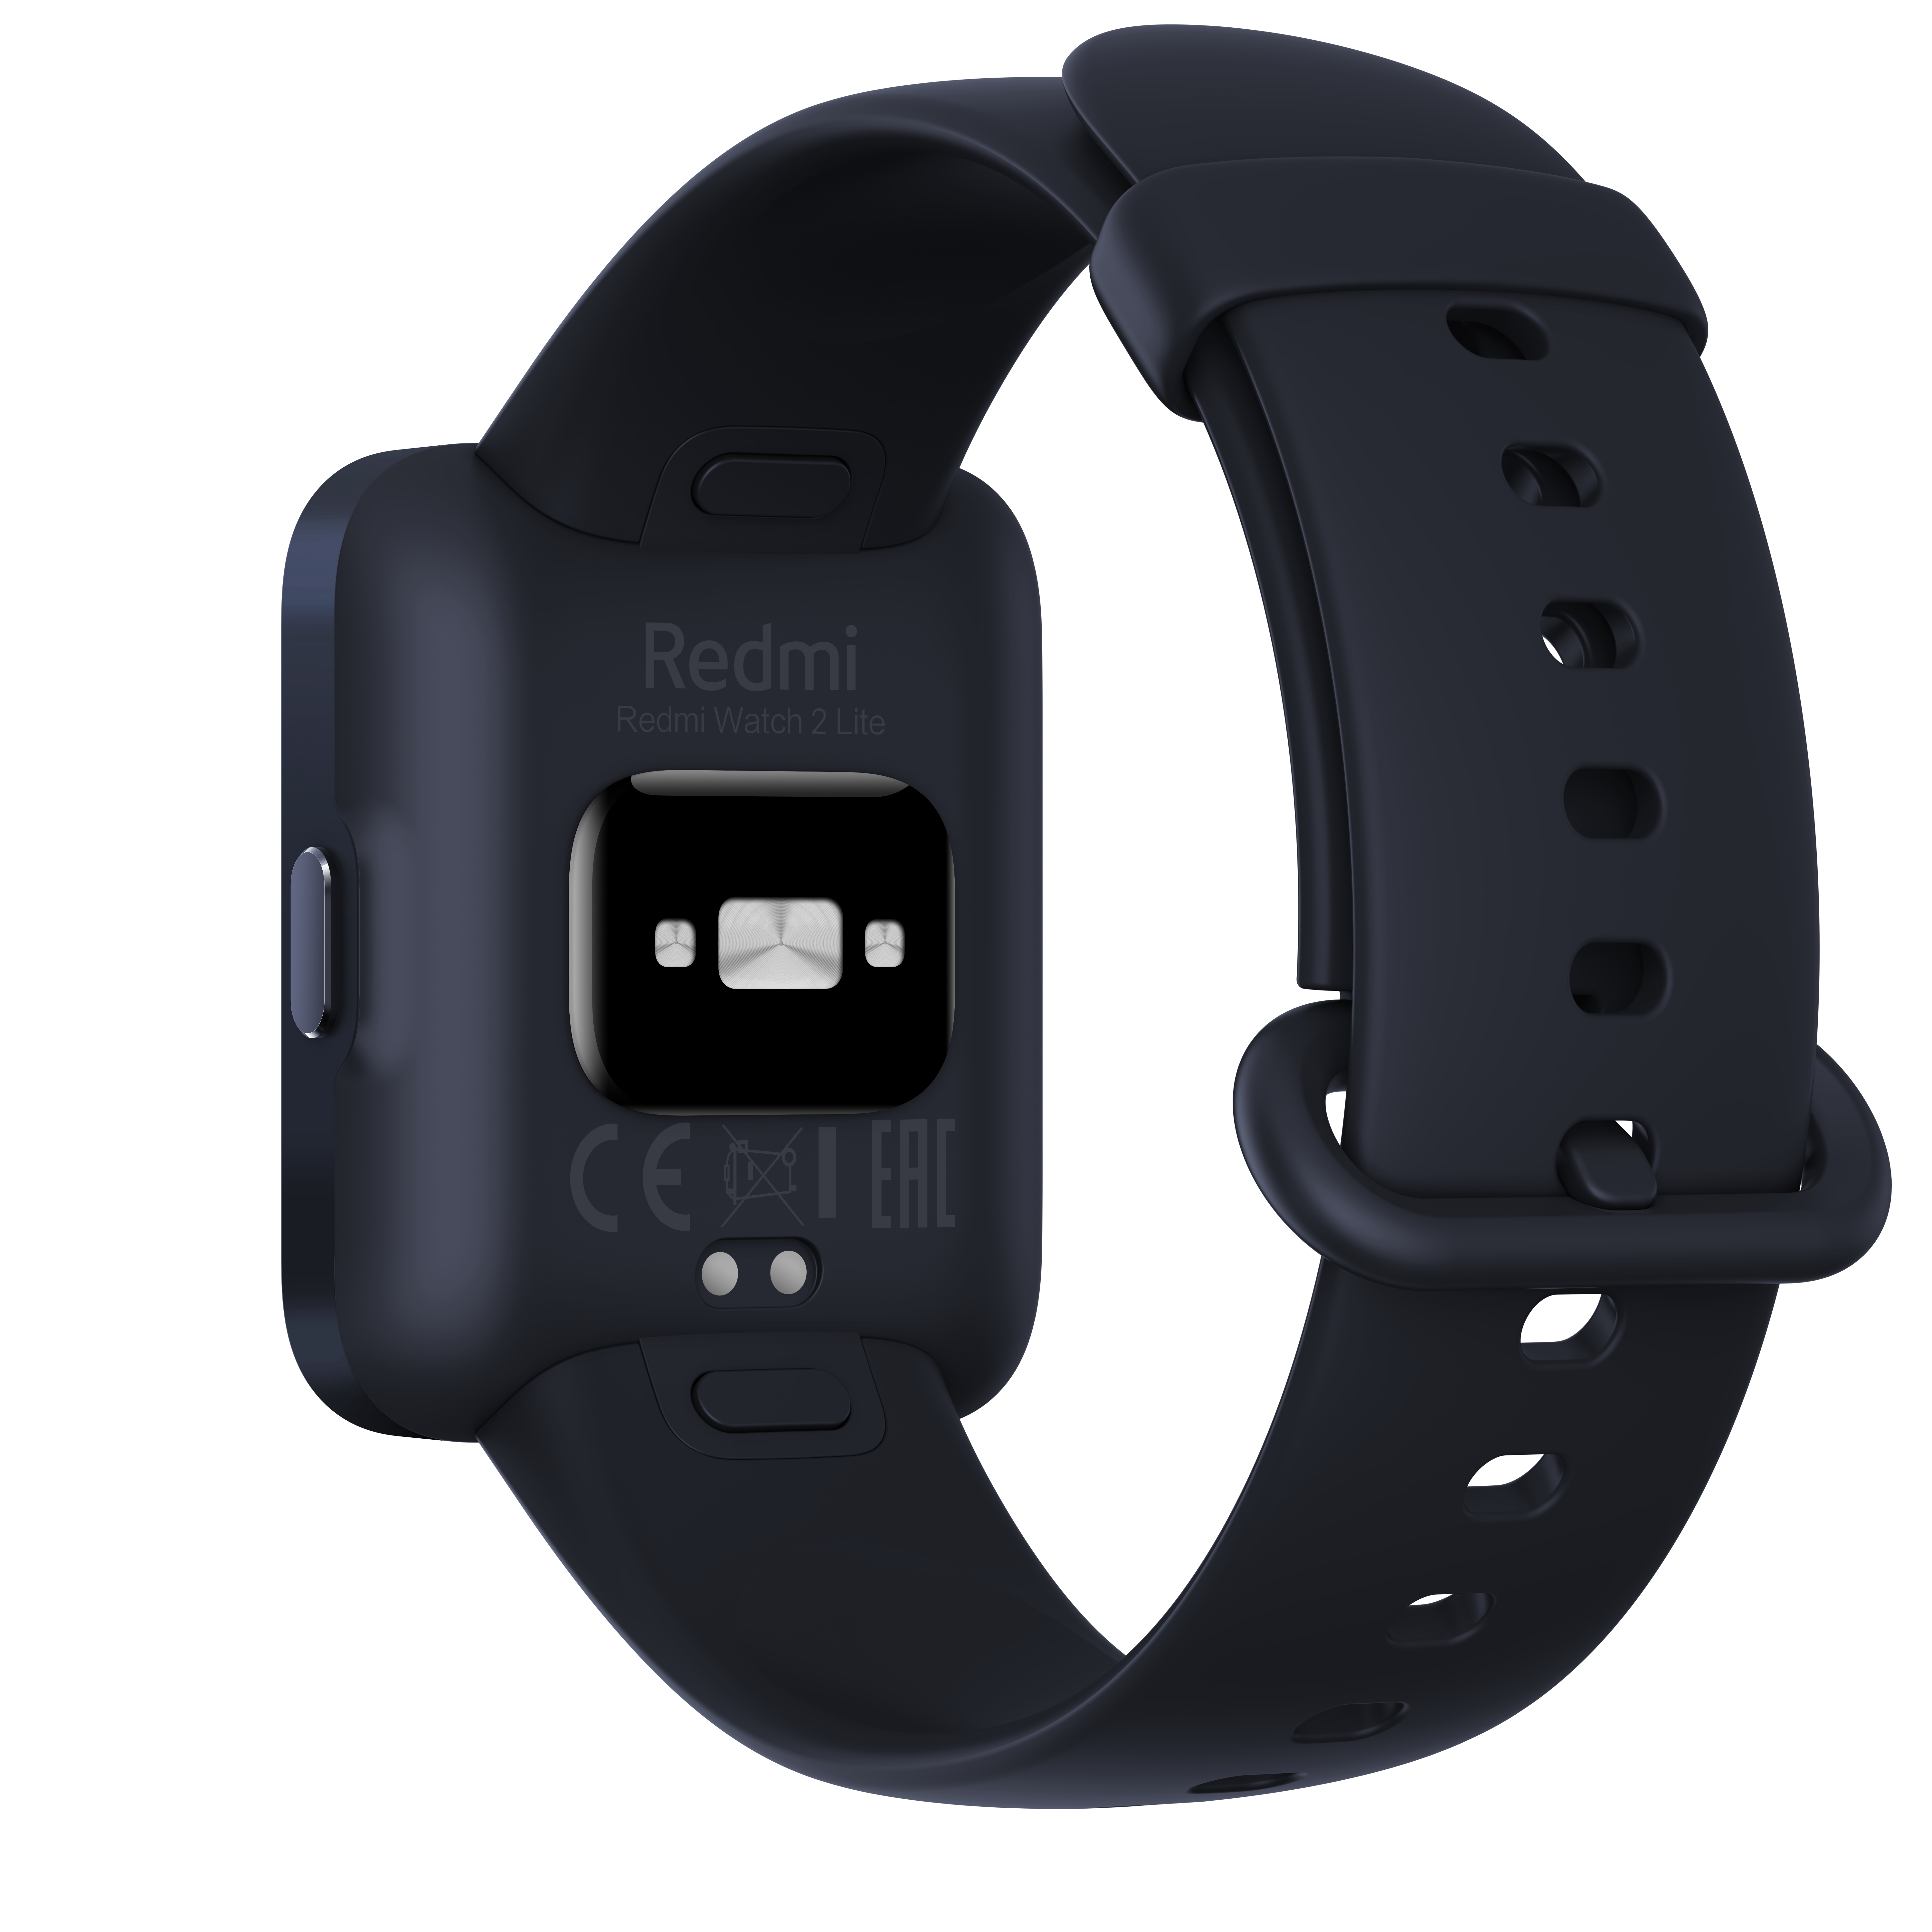 Smartwatch Xiaomi Redmi Watch 2 Lite (Blue)